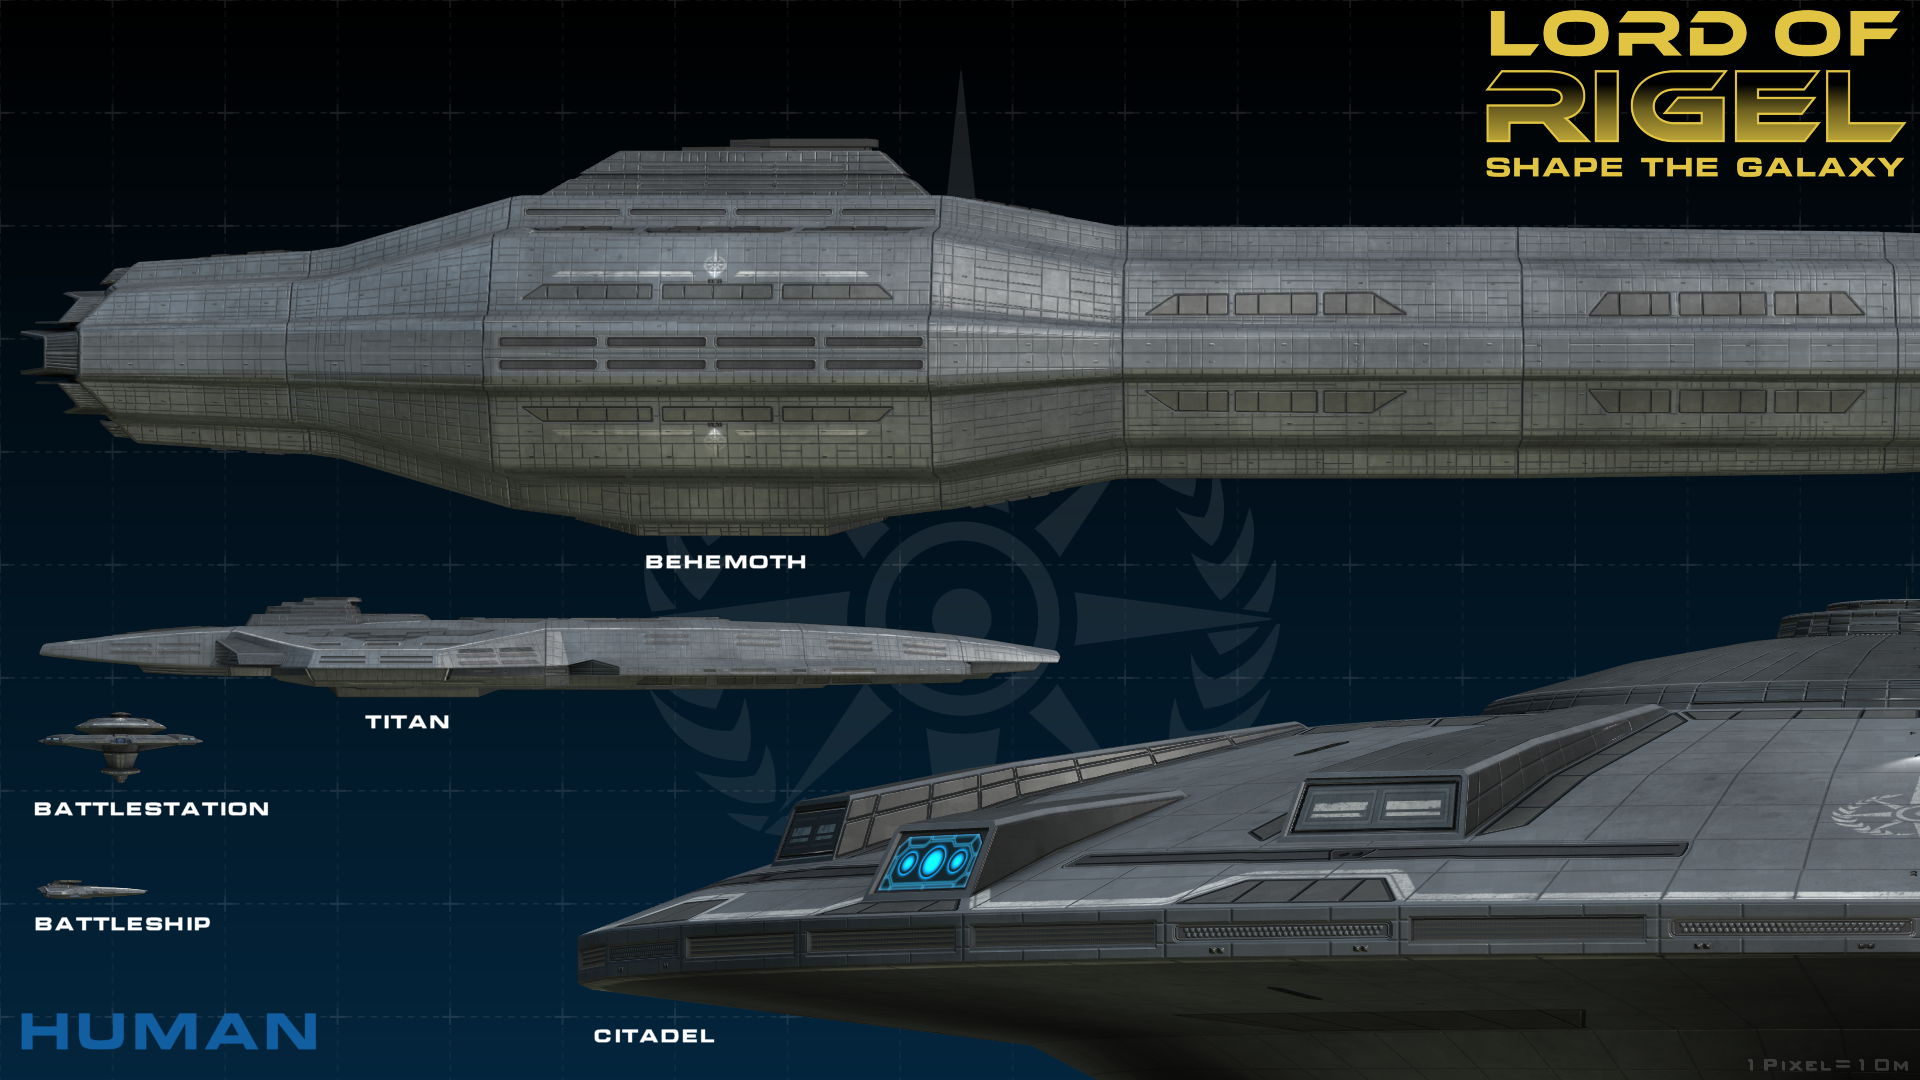 Human super capital ships to scale! : r/lordofrigel